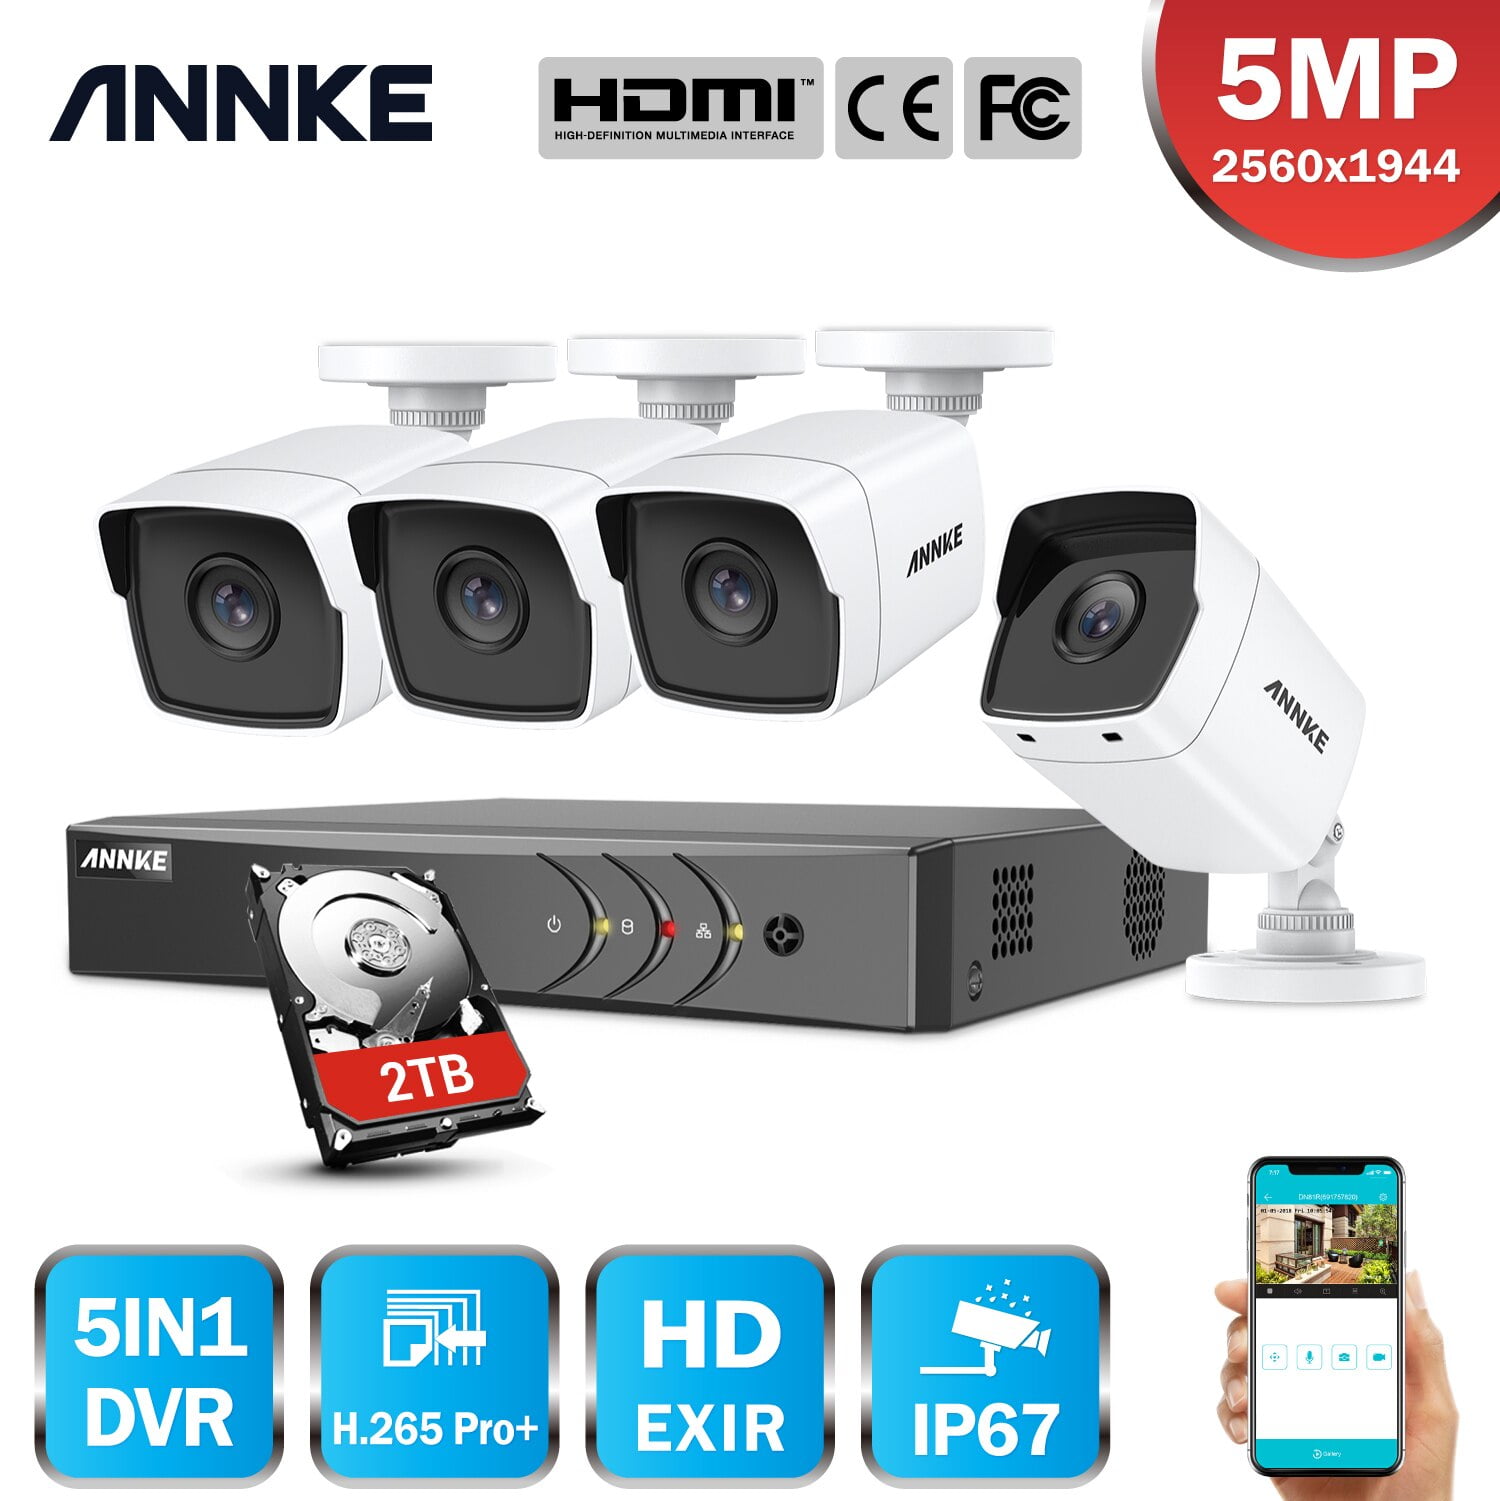 ANNKE ANNKE 5MP Lite 16+2CH DVR 3000TVL Outdoor IP66 Cameras Home Security System Kit 